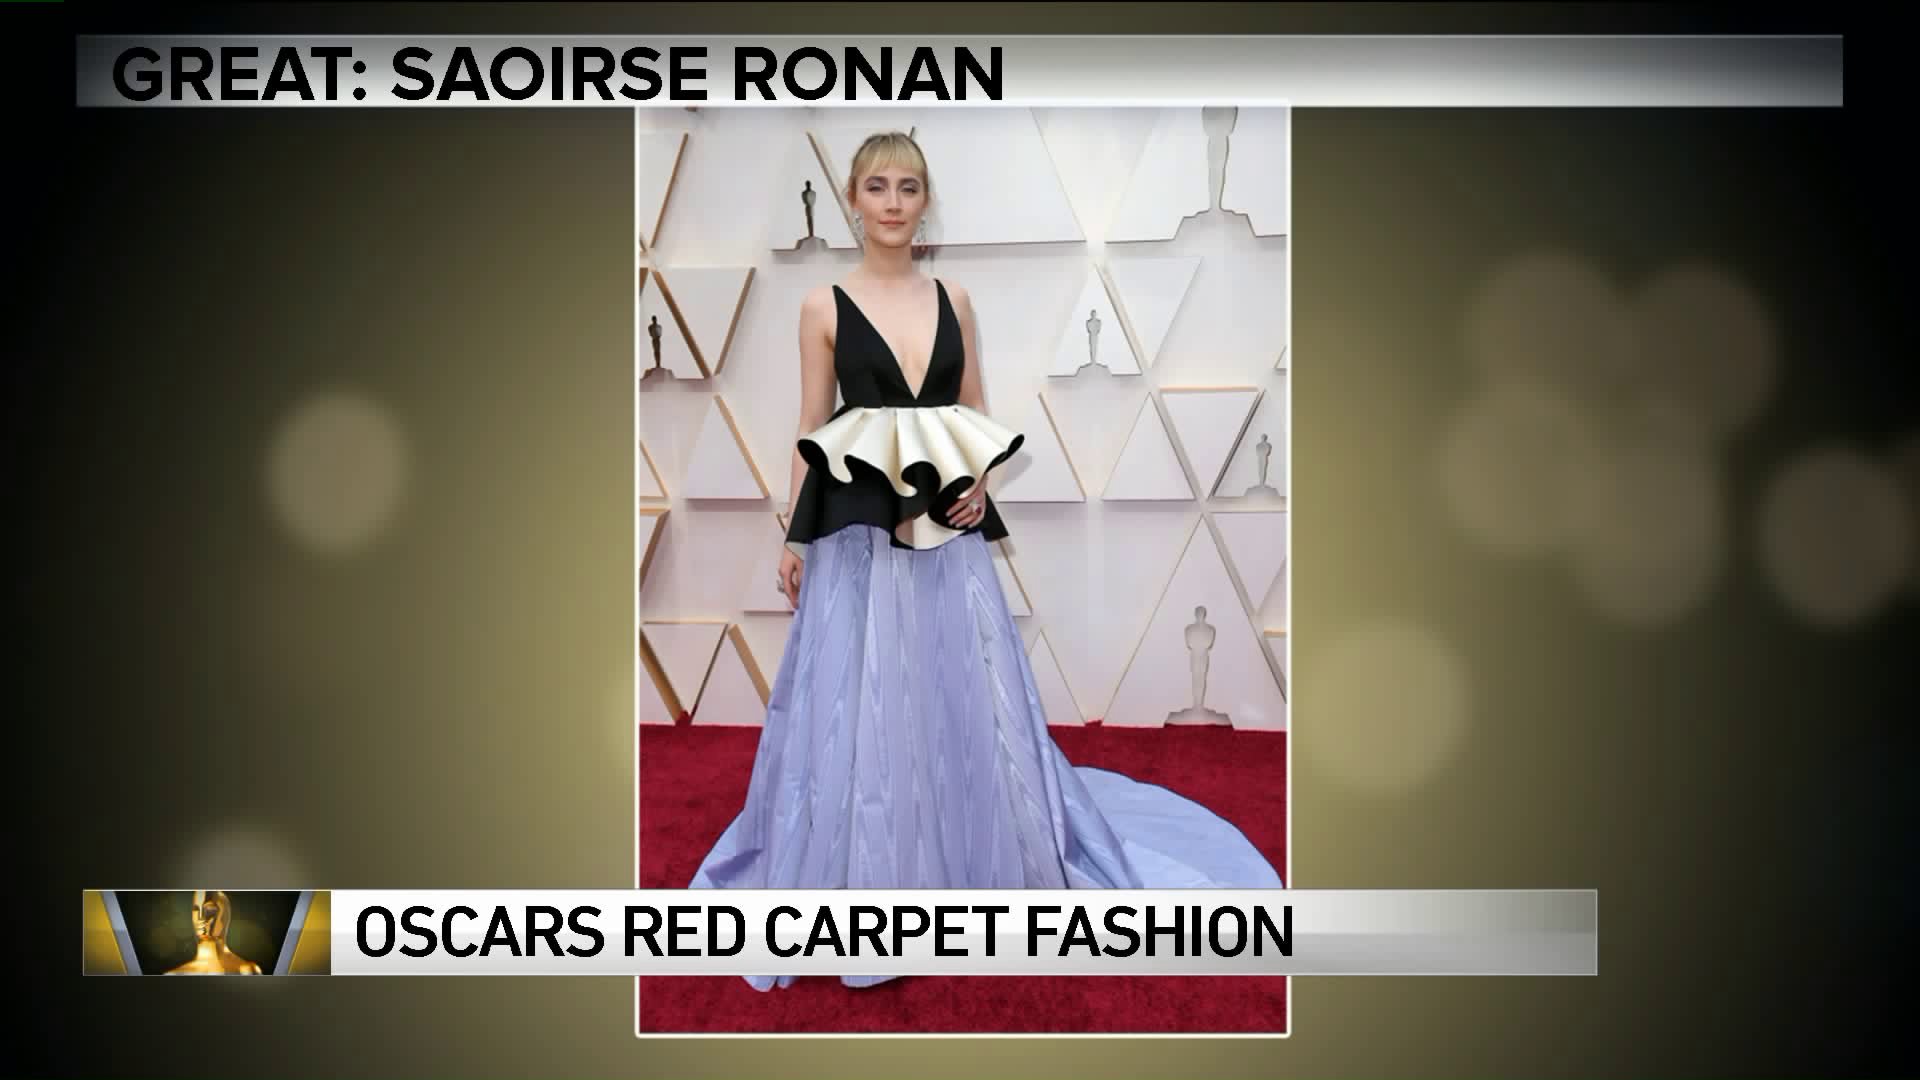 Around Town talks Oscars Fashion